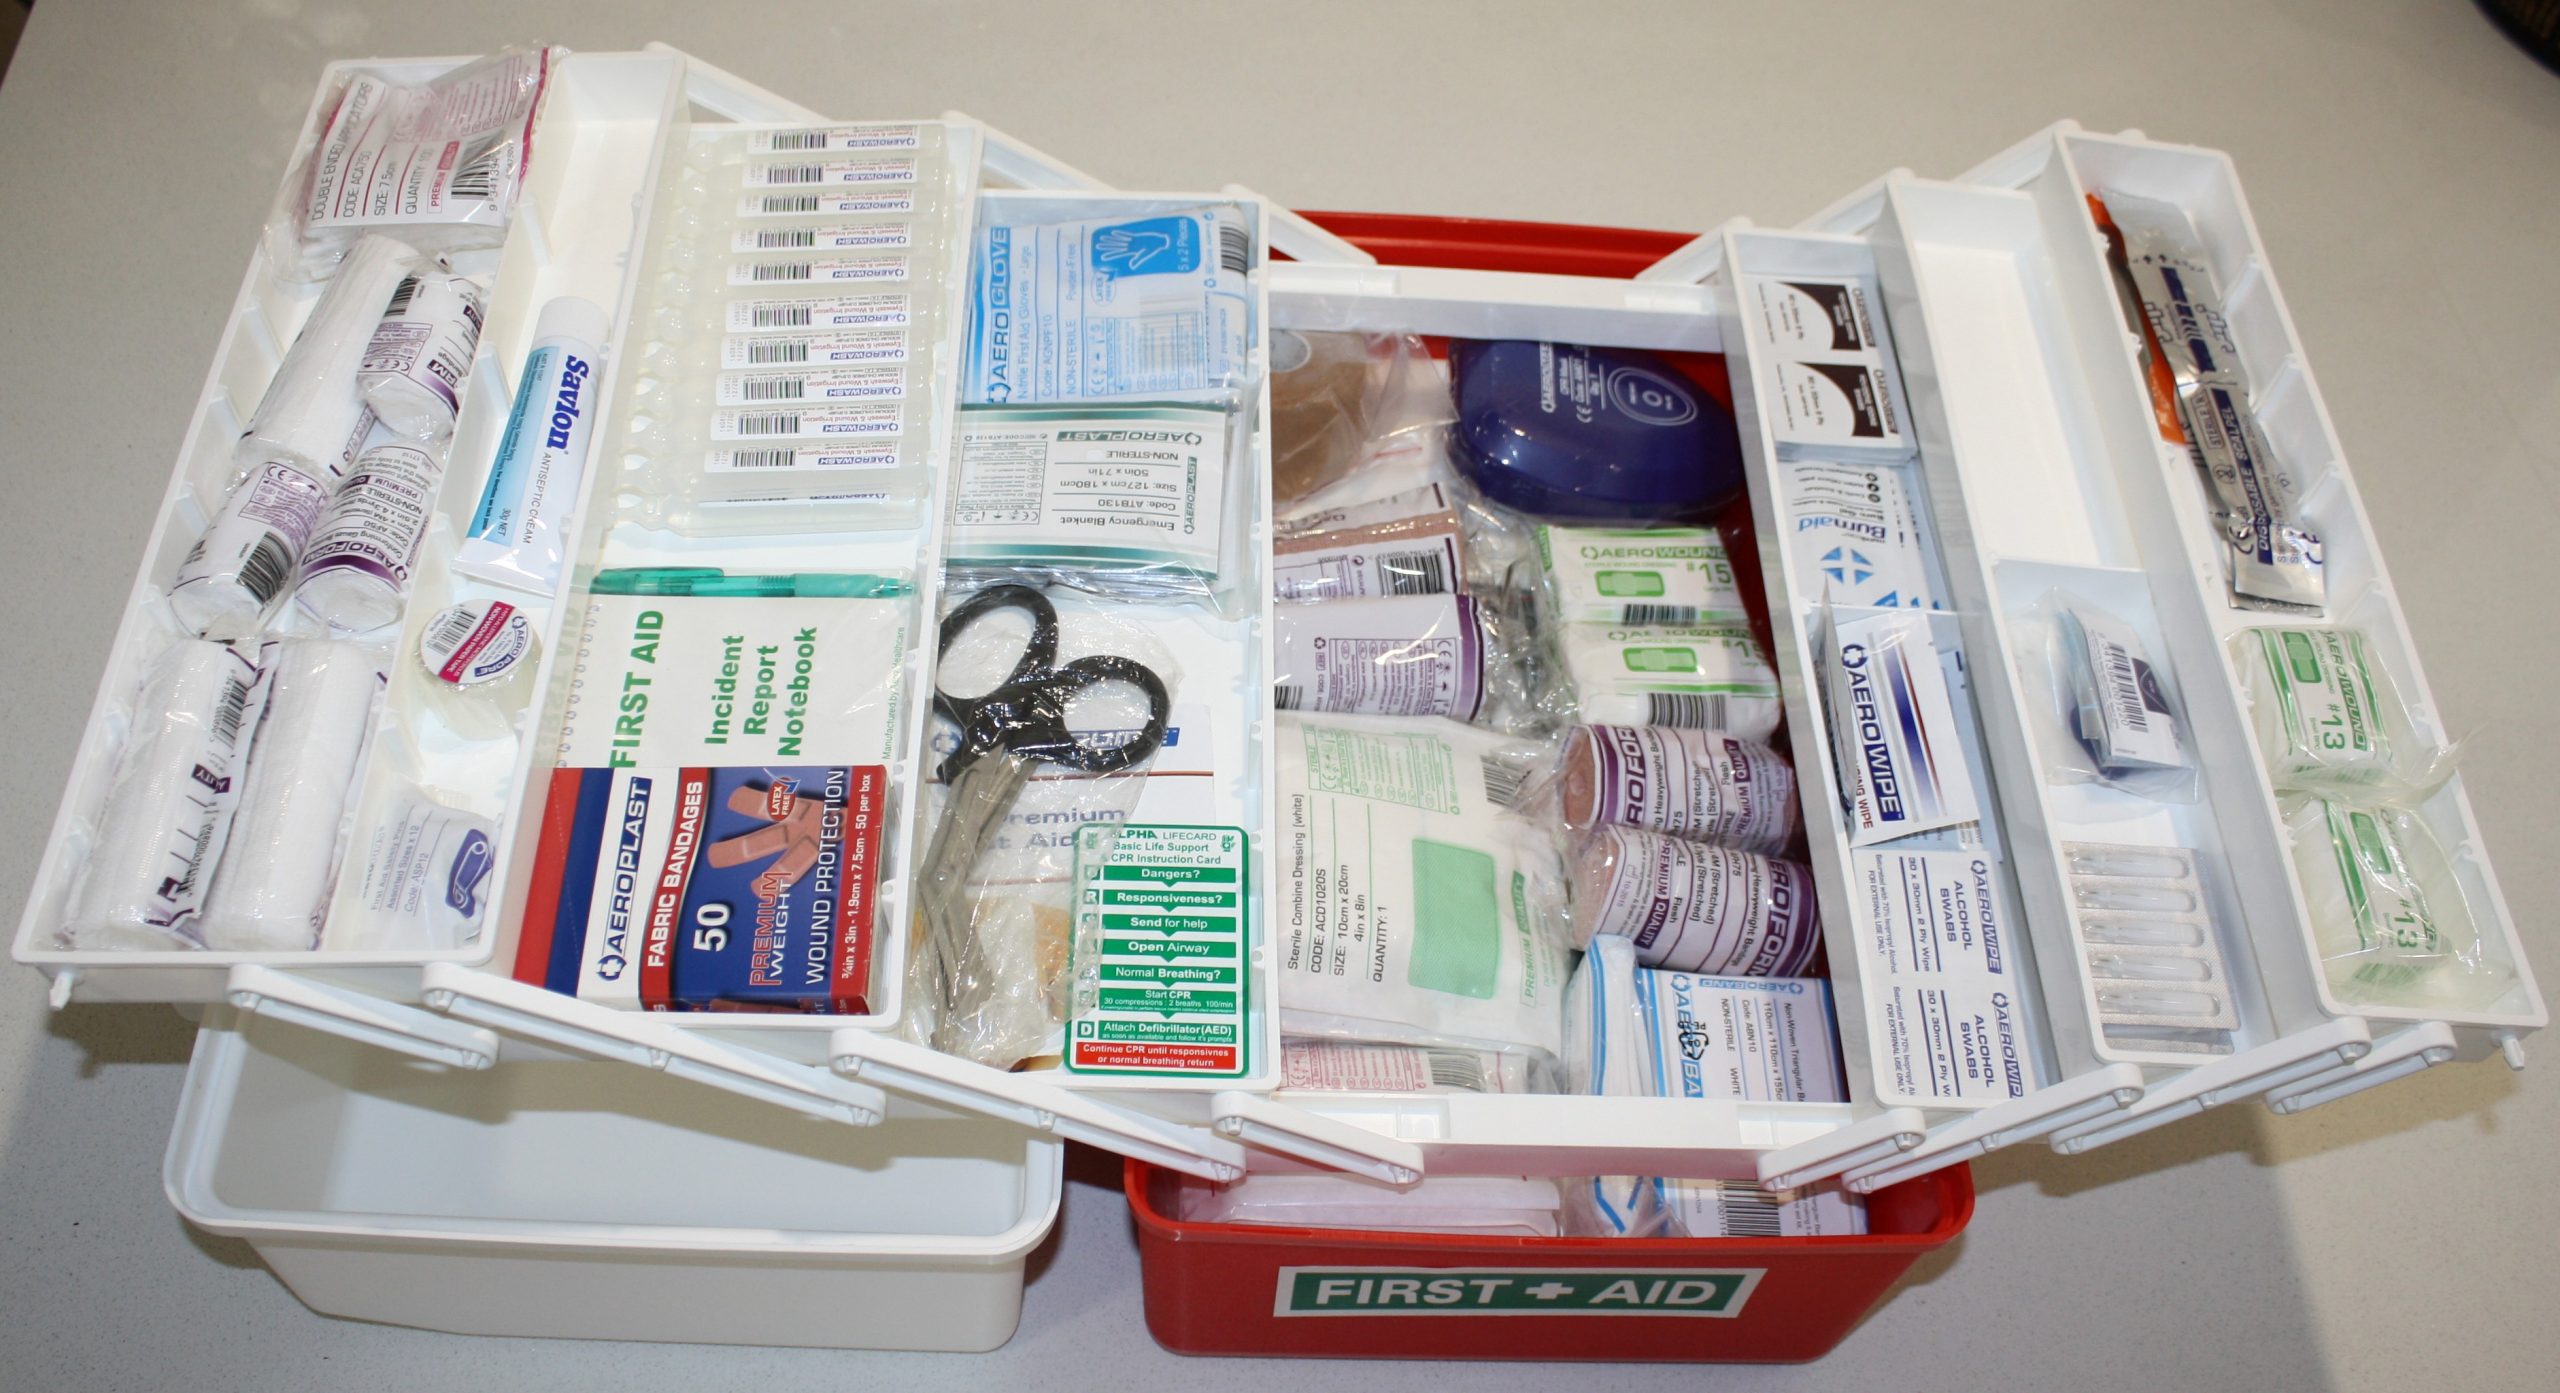 Marine Scale 'G' Regulation First Aid Kit - Suncoast First Aid